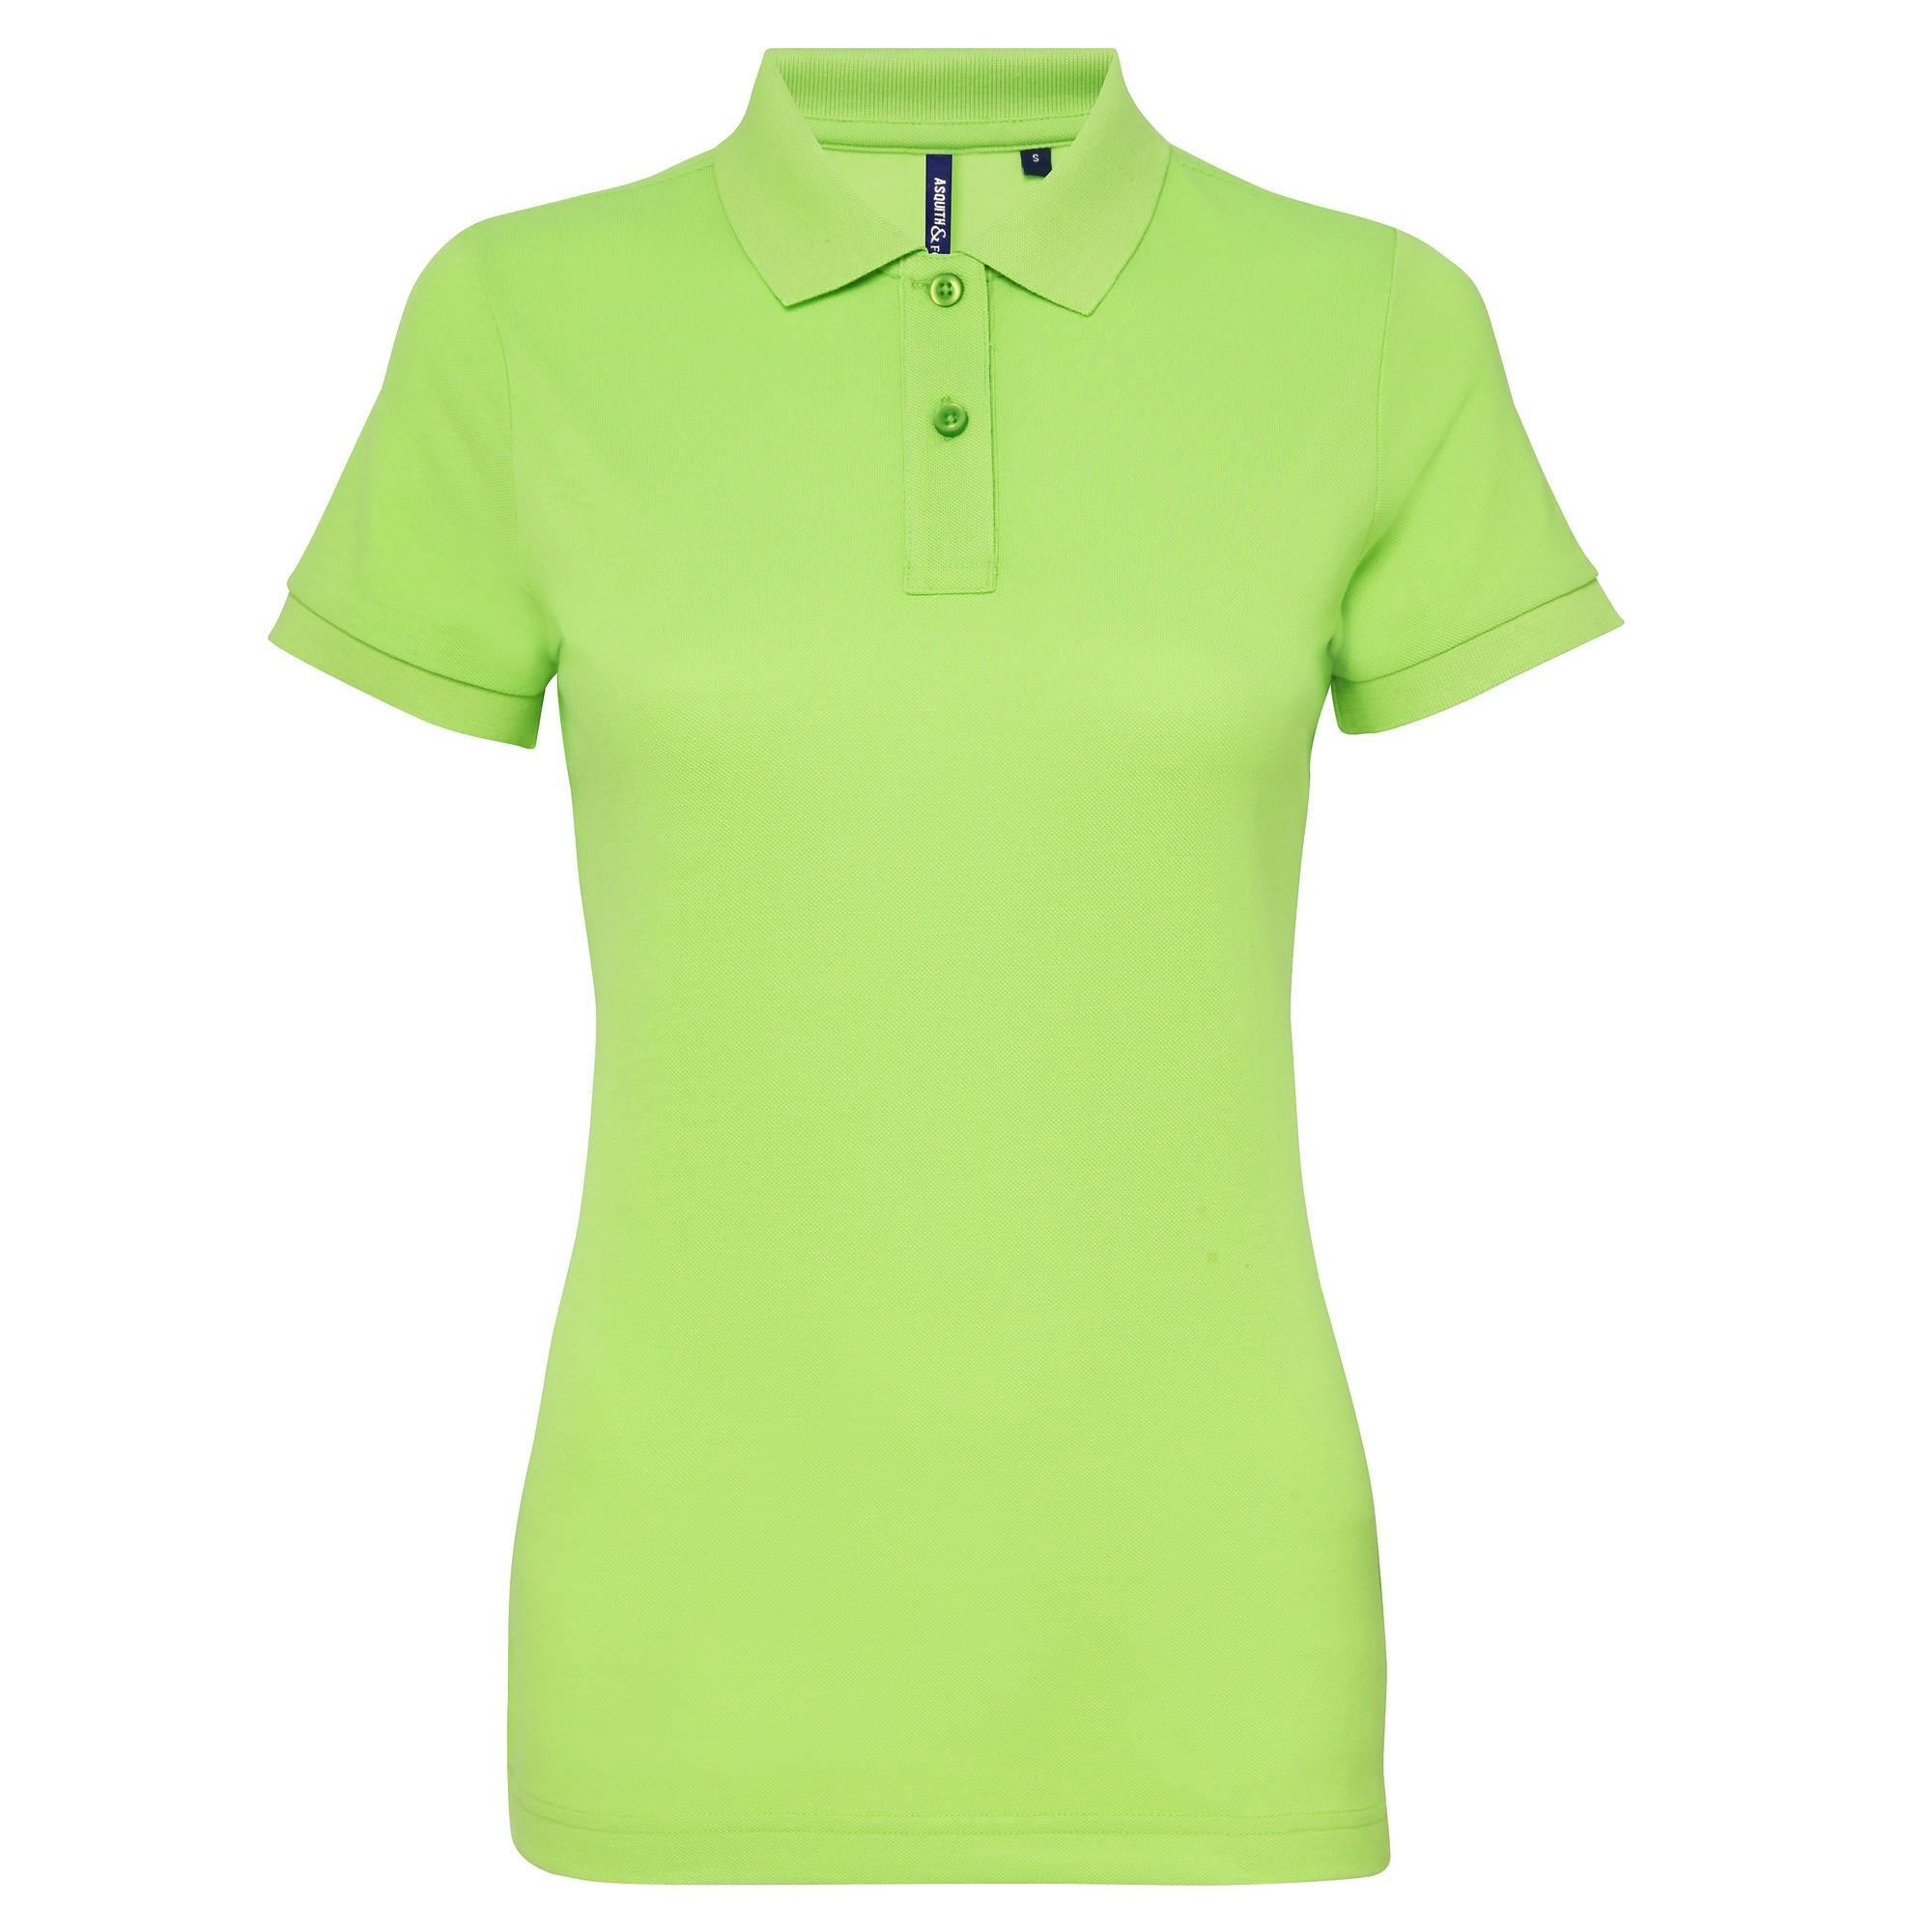 Asquith & Fox Womens/Ladies Short Sleeve Performance Blend Polo Shirt (Neon Green) (S)